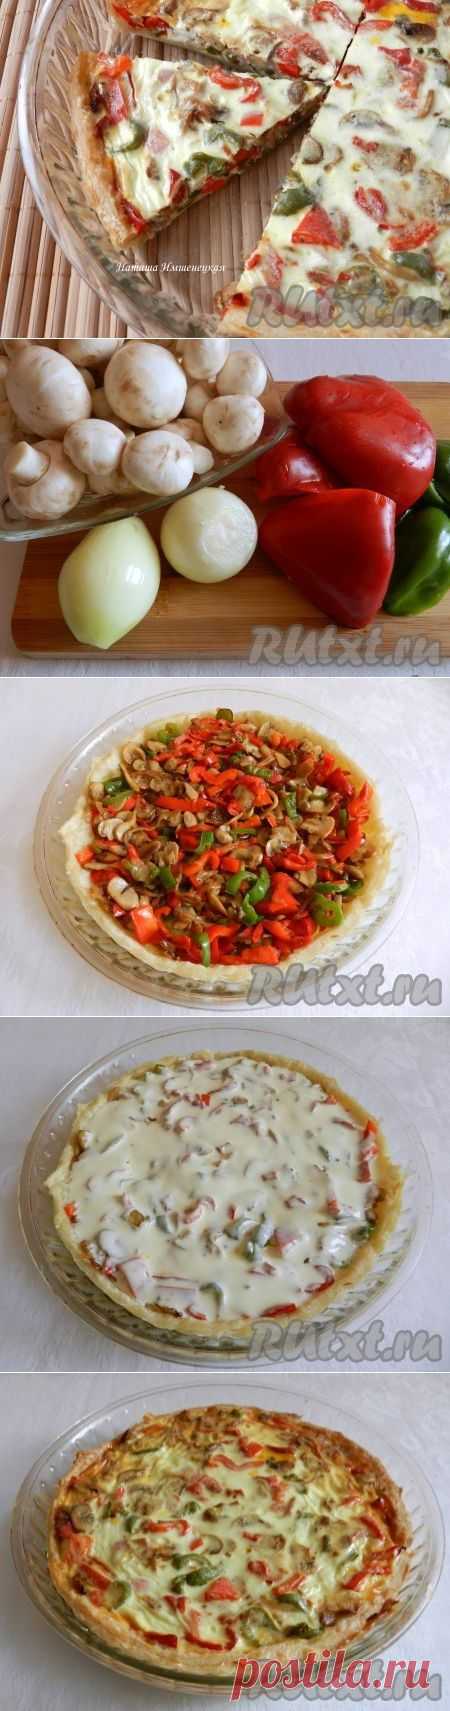 Пирог из слоеного теста с грибами (рецепт с фото) | RUtxt.ru